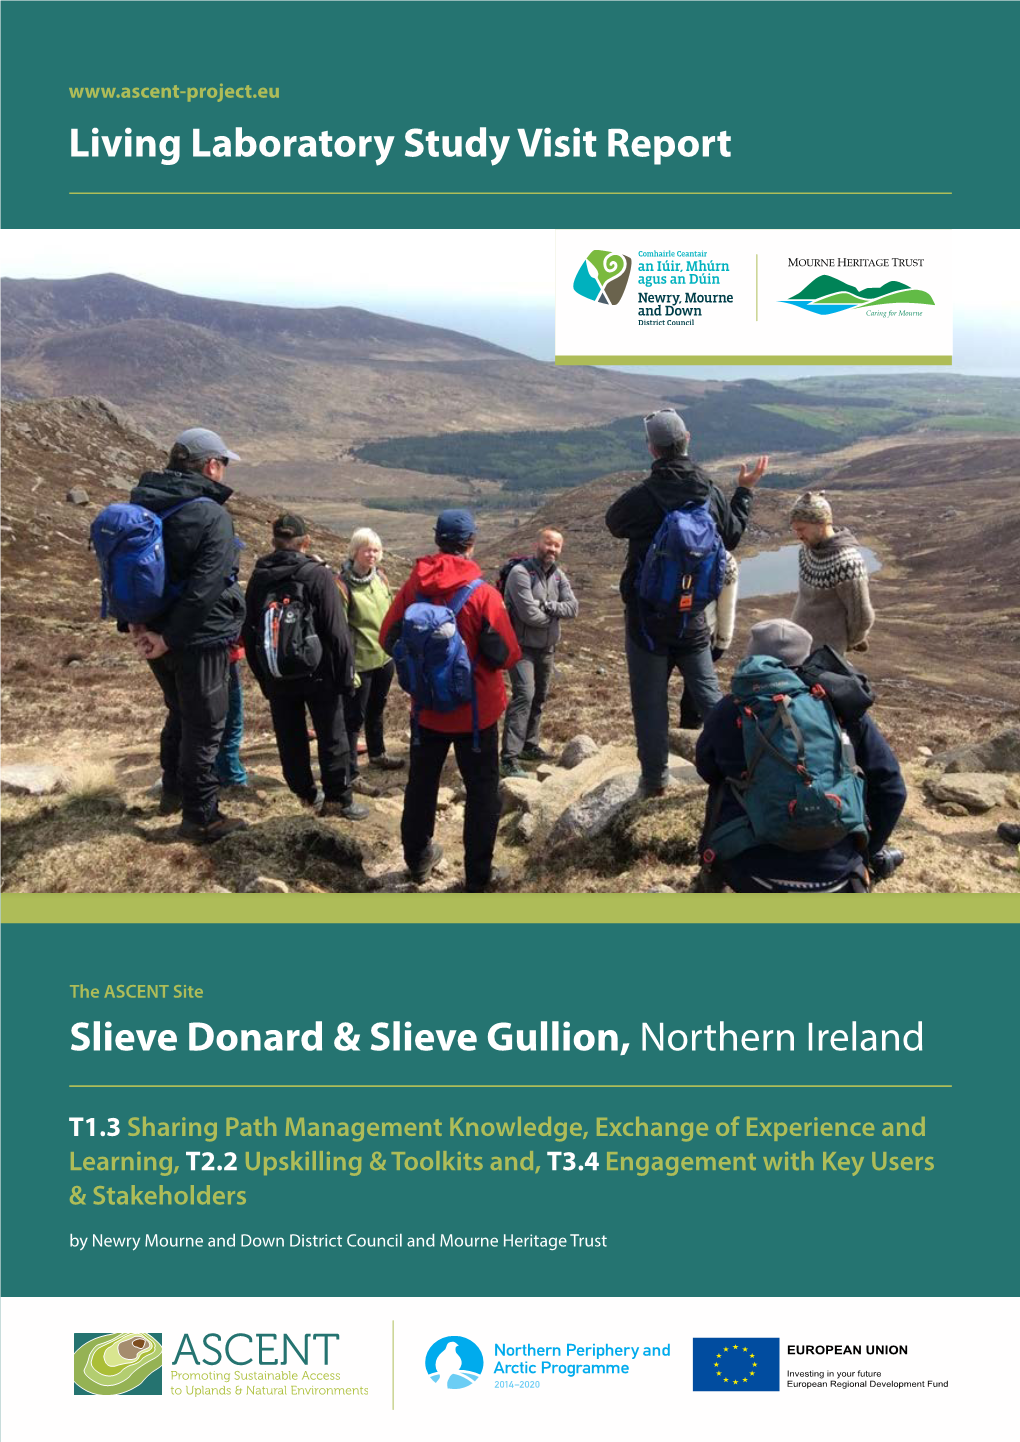 Slieve Donard & Slieve Gullion, Northern Ireland Living Laboratory Study Visit Report